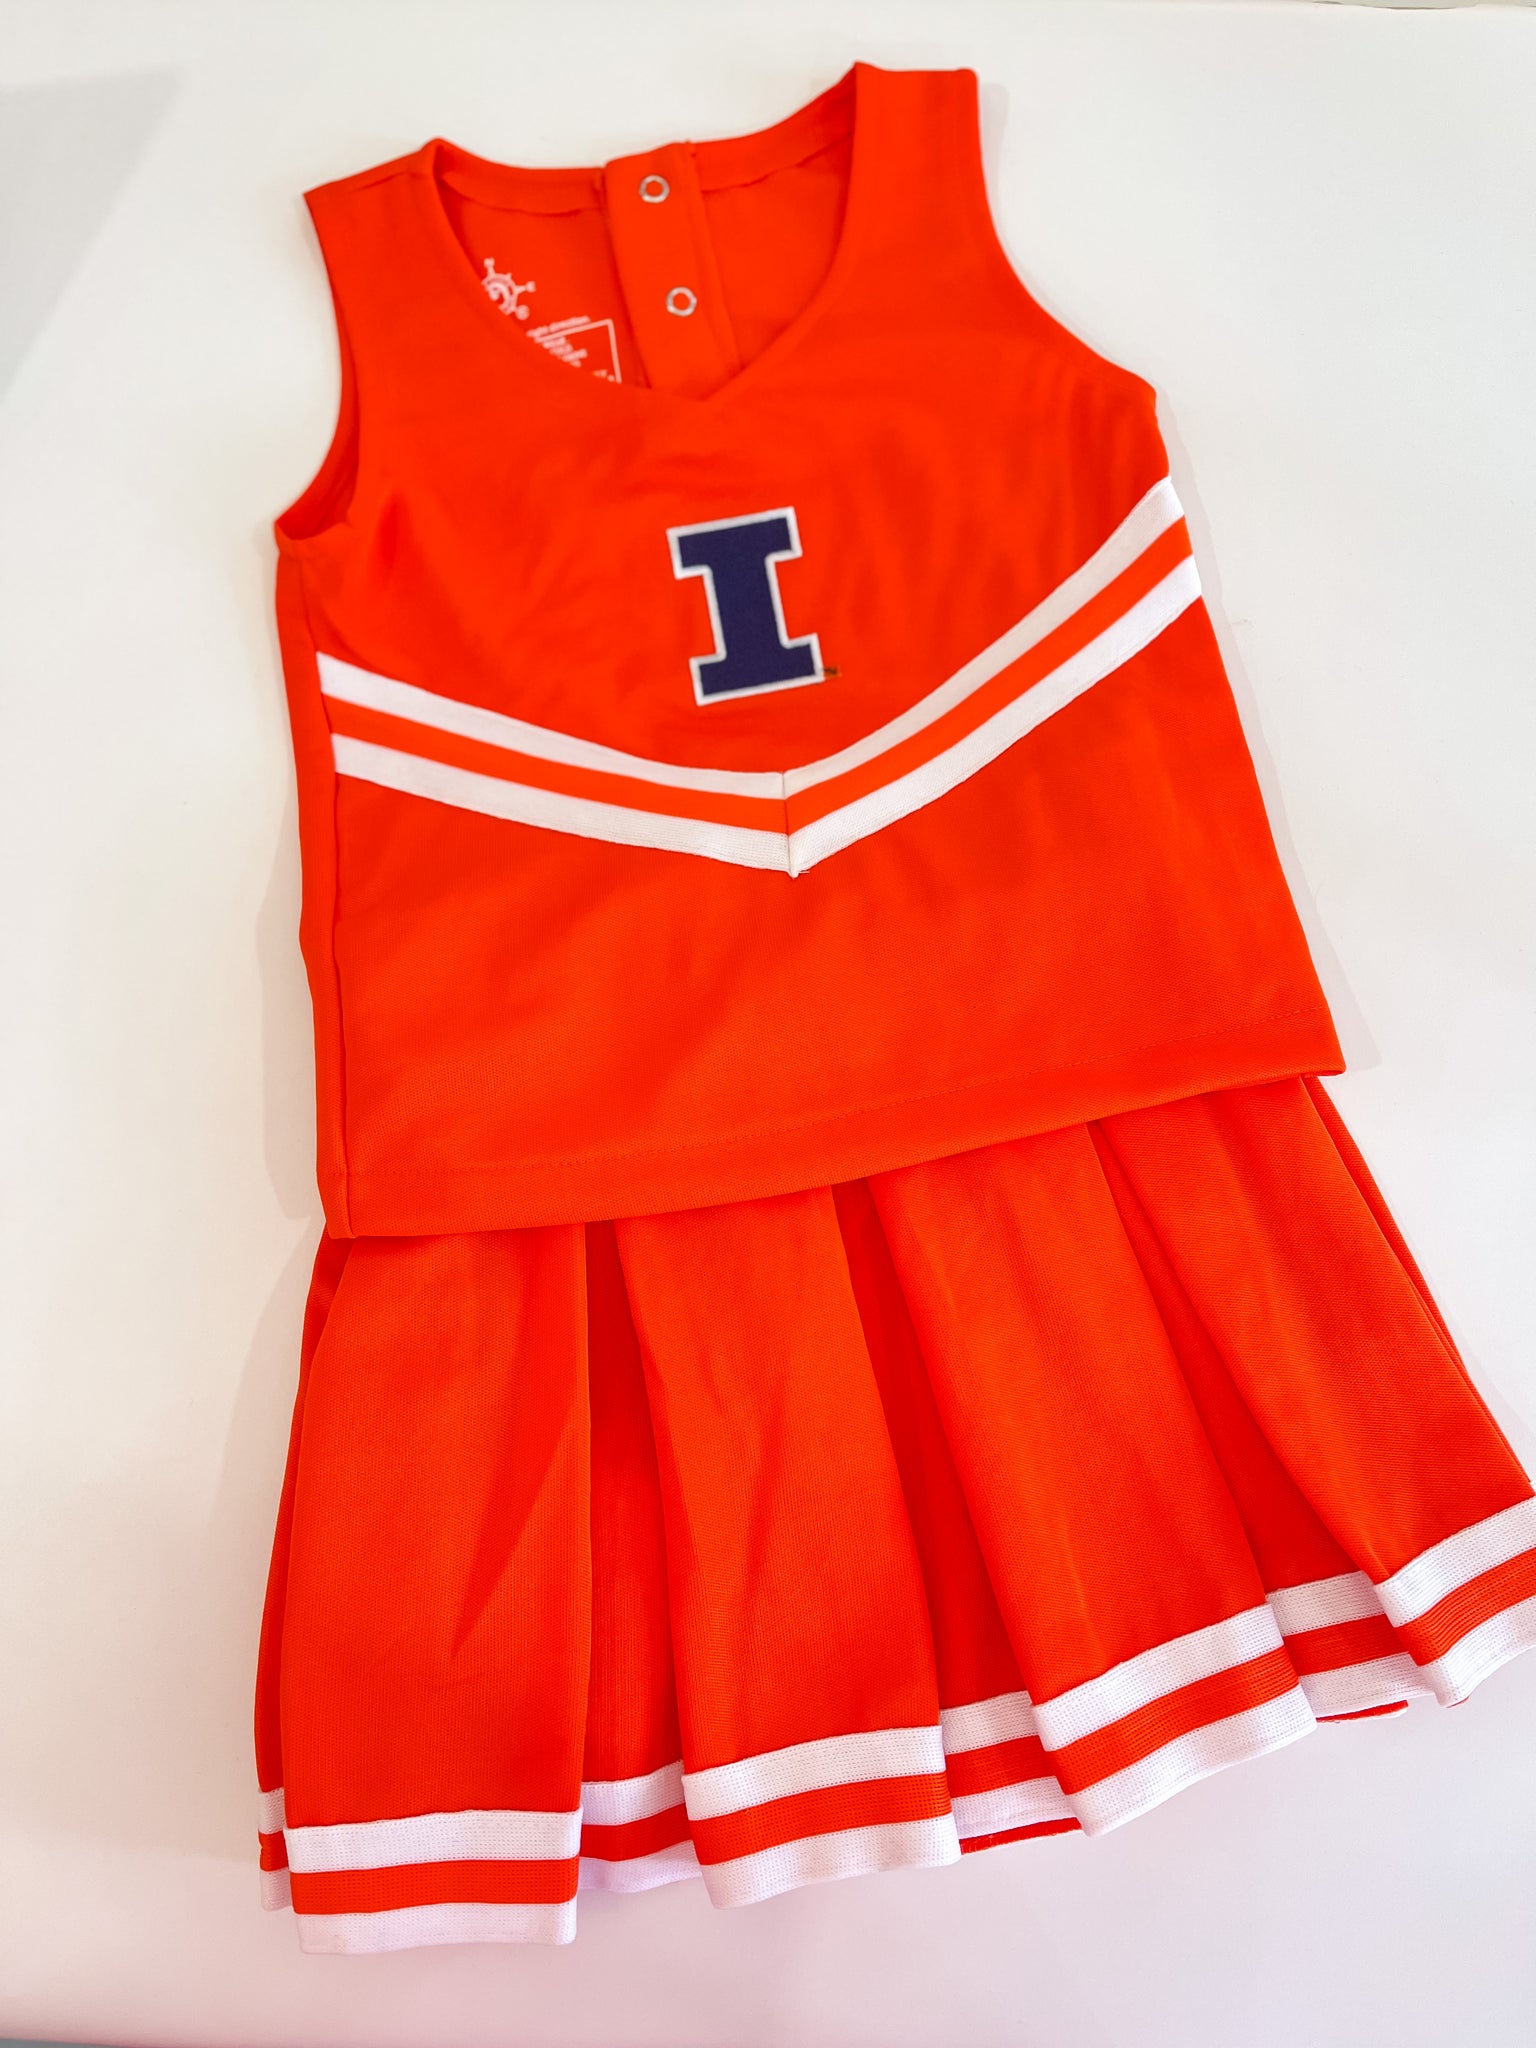 Illini Cheer Uniform - Orange